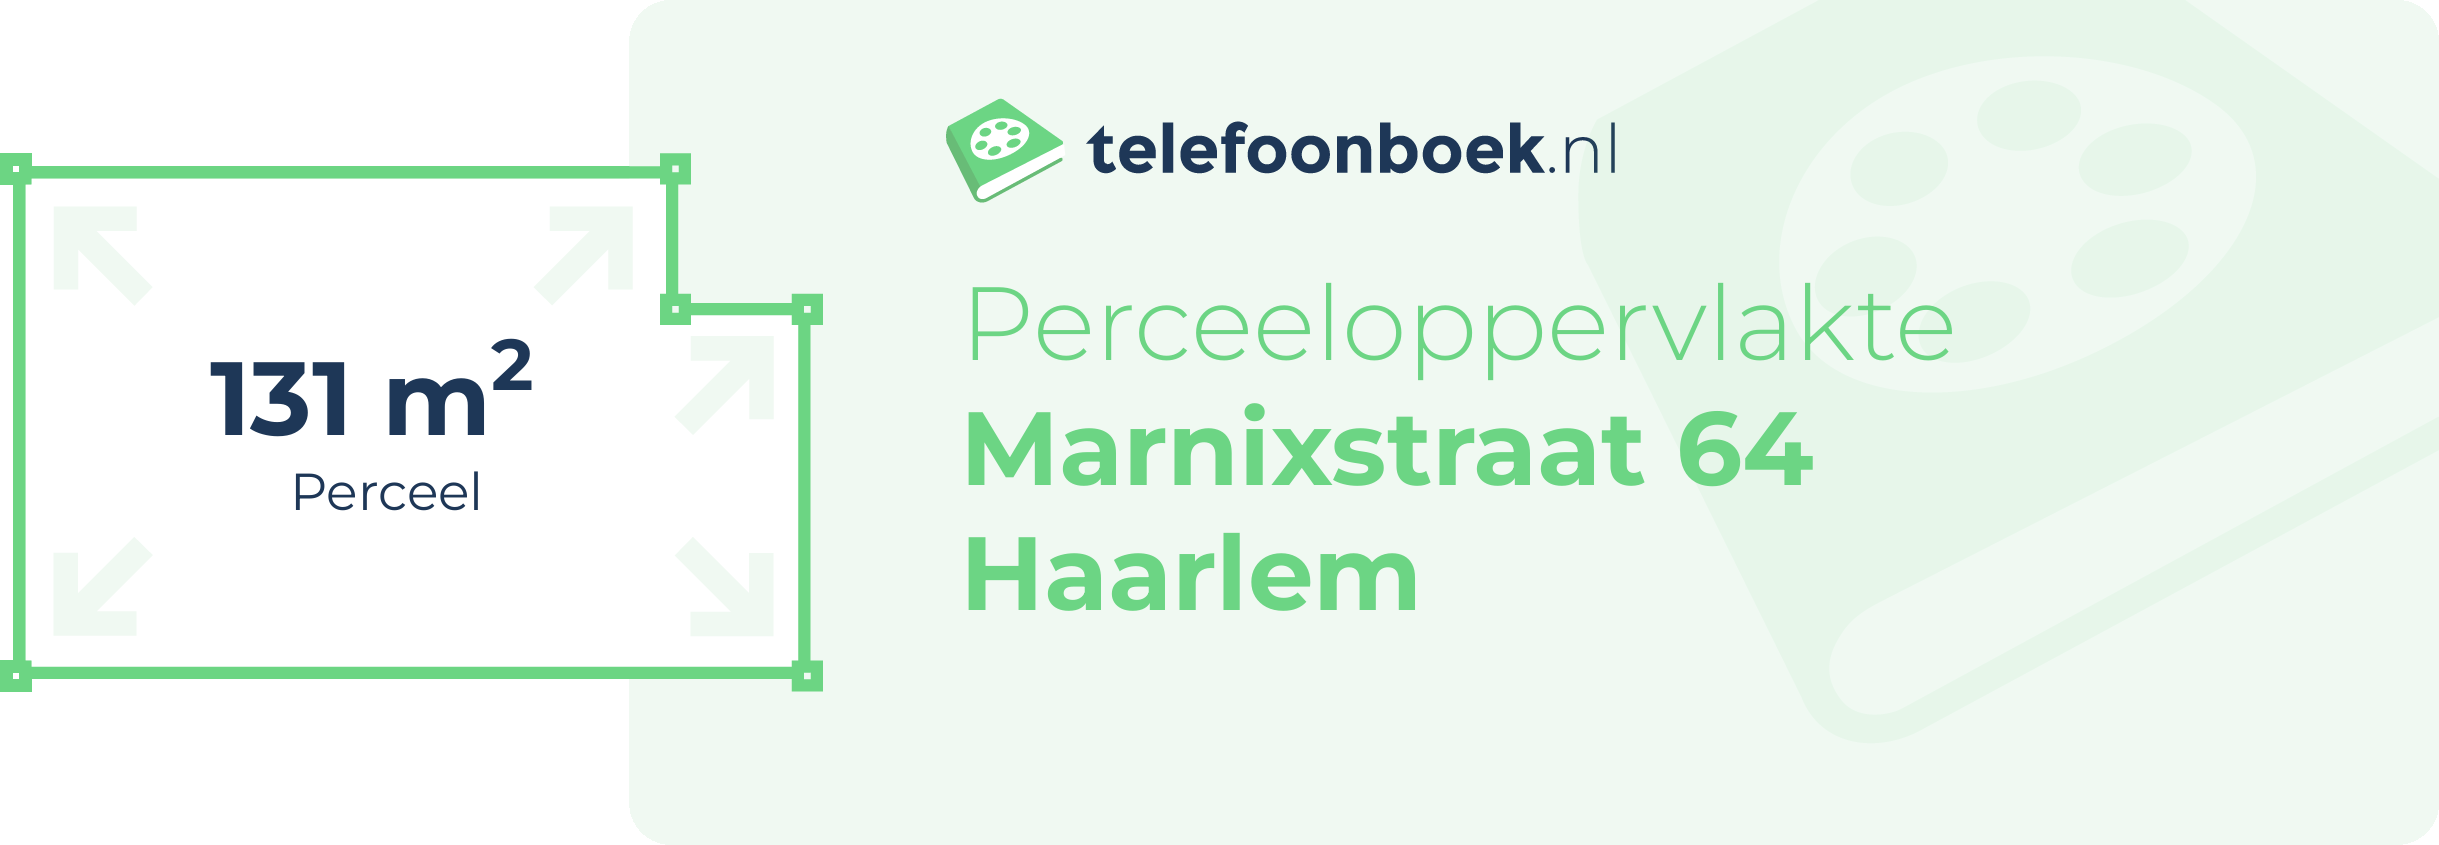 Perceeloppervlakte Marnixstraat 64 Haarlem